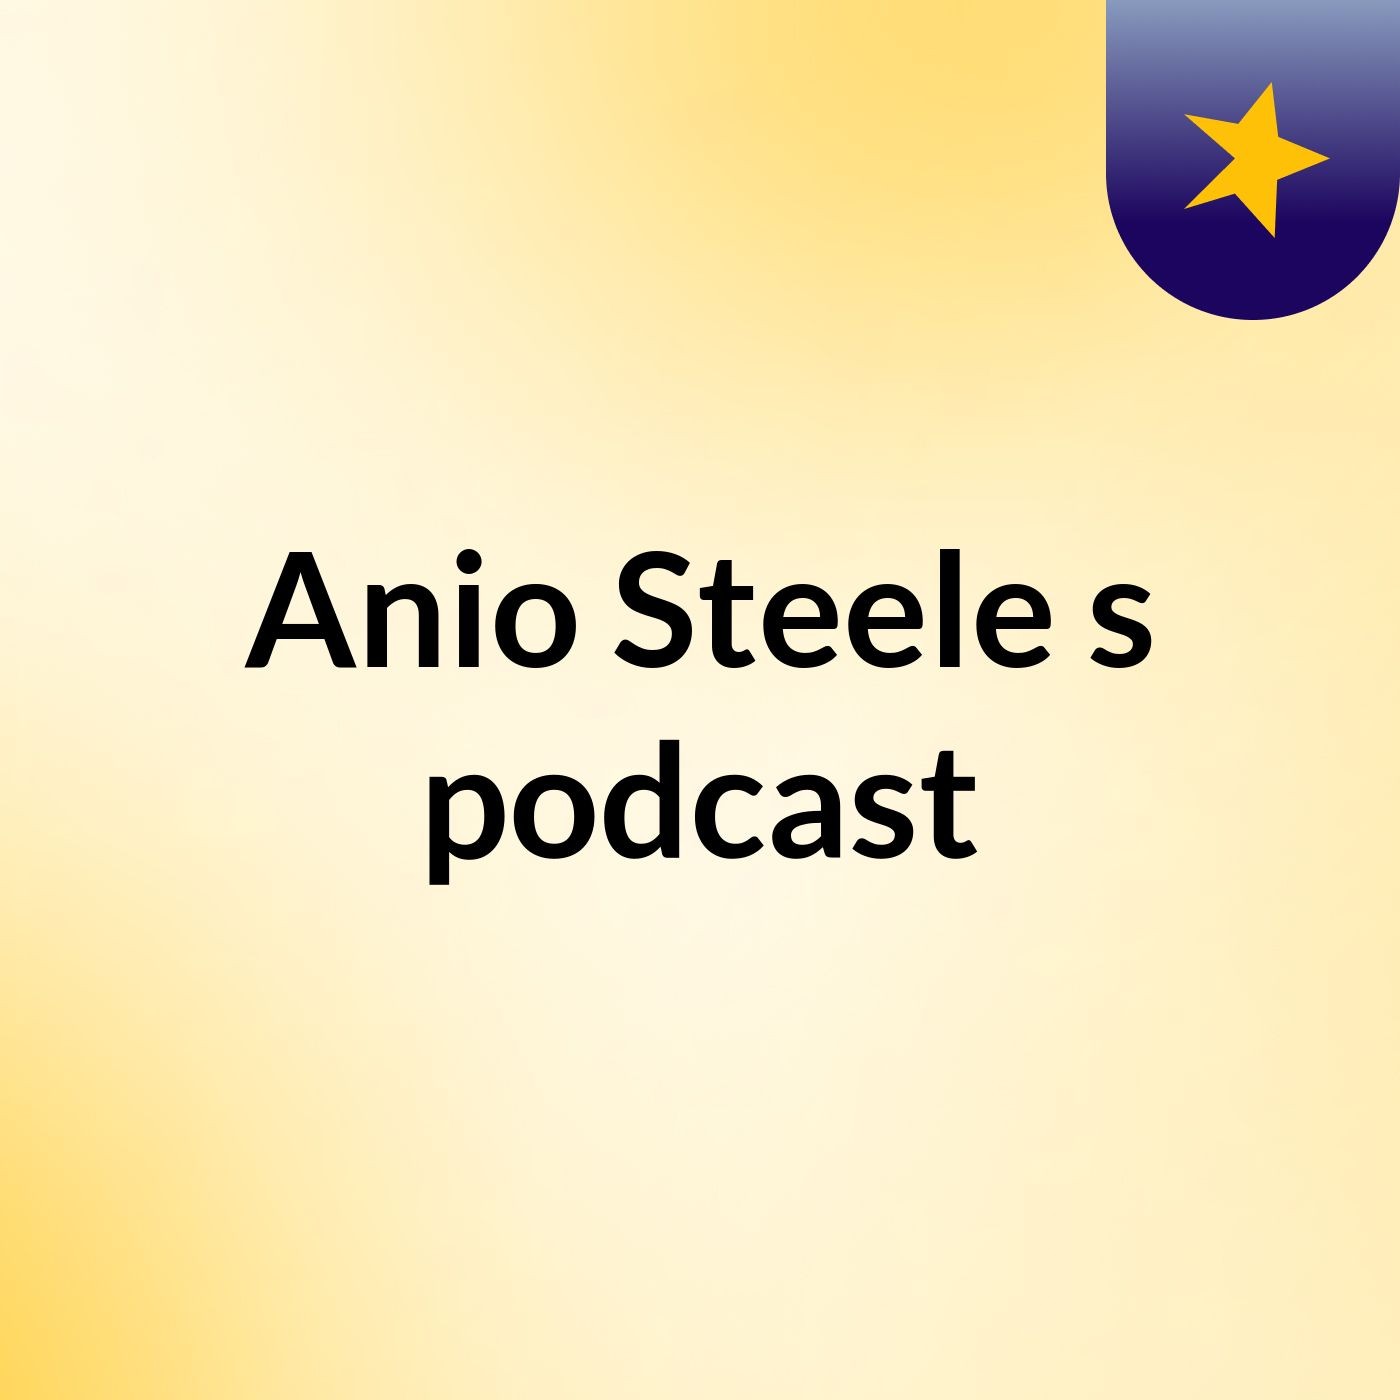 Anio Steele's podcast